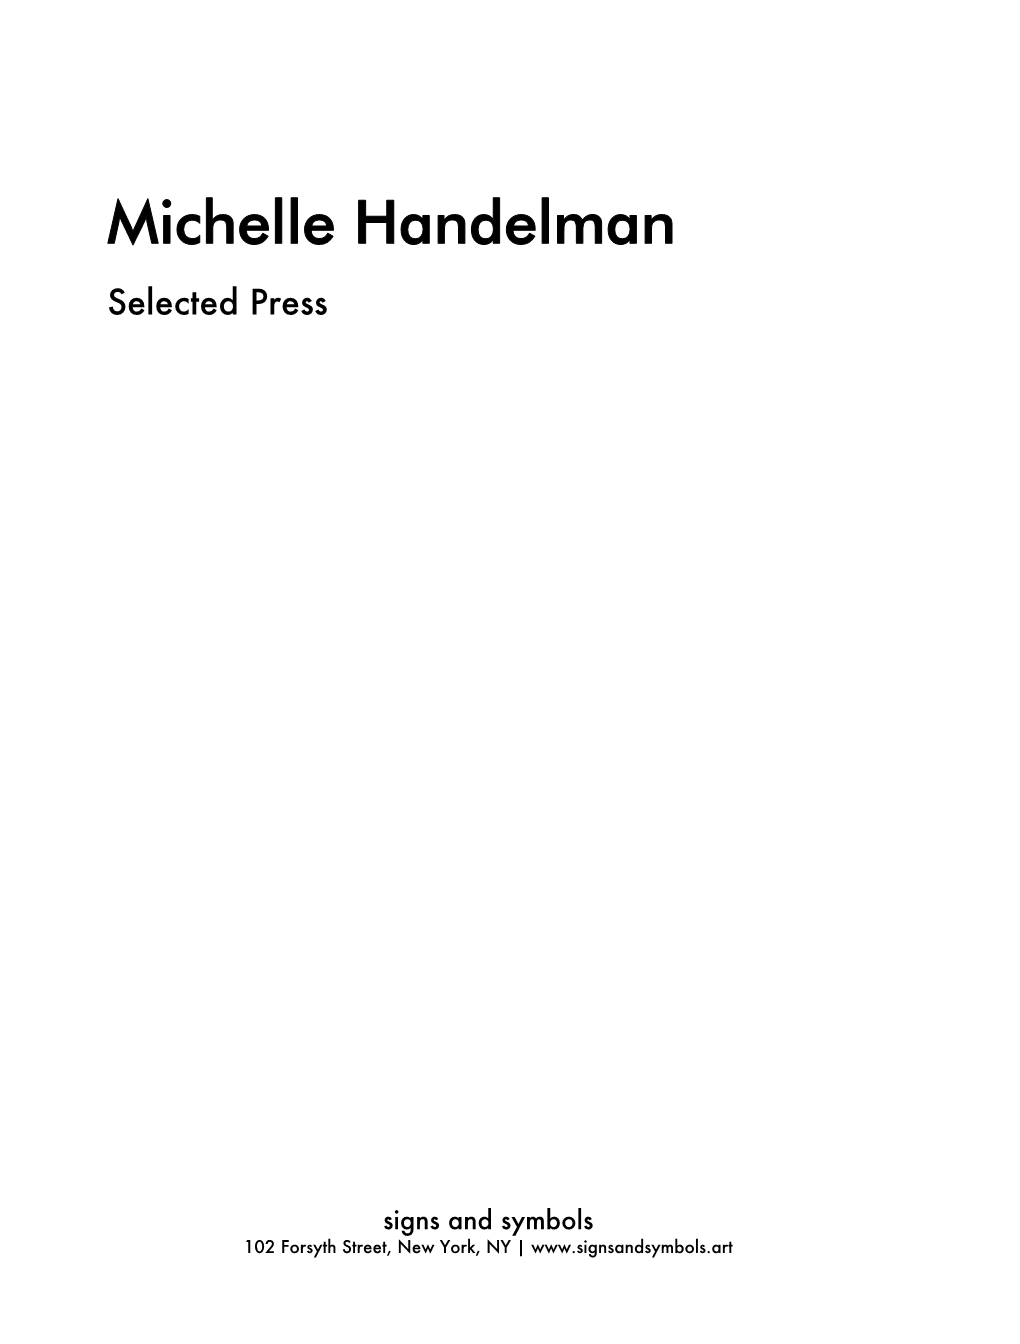 Michelle Handelman Selected Press